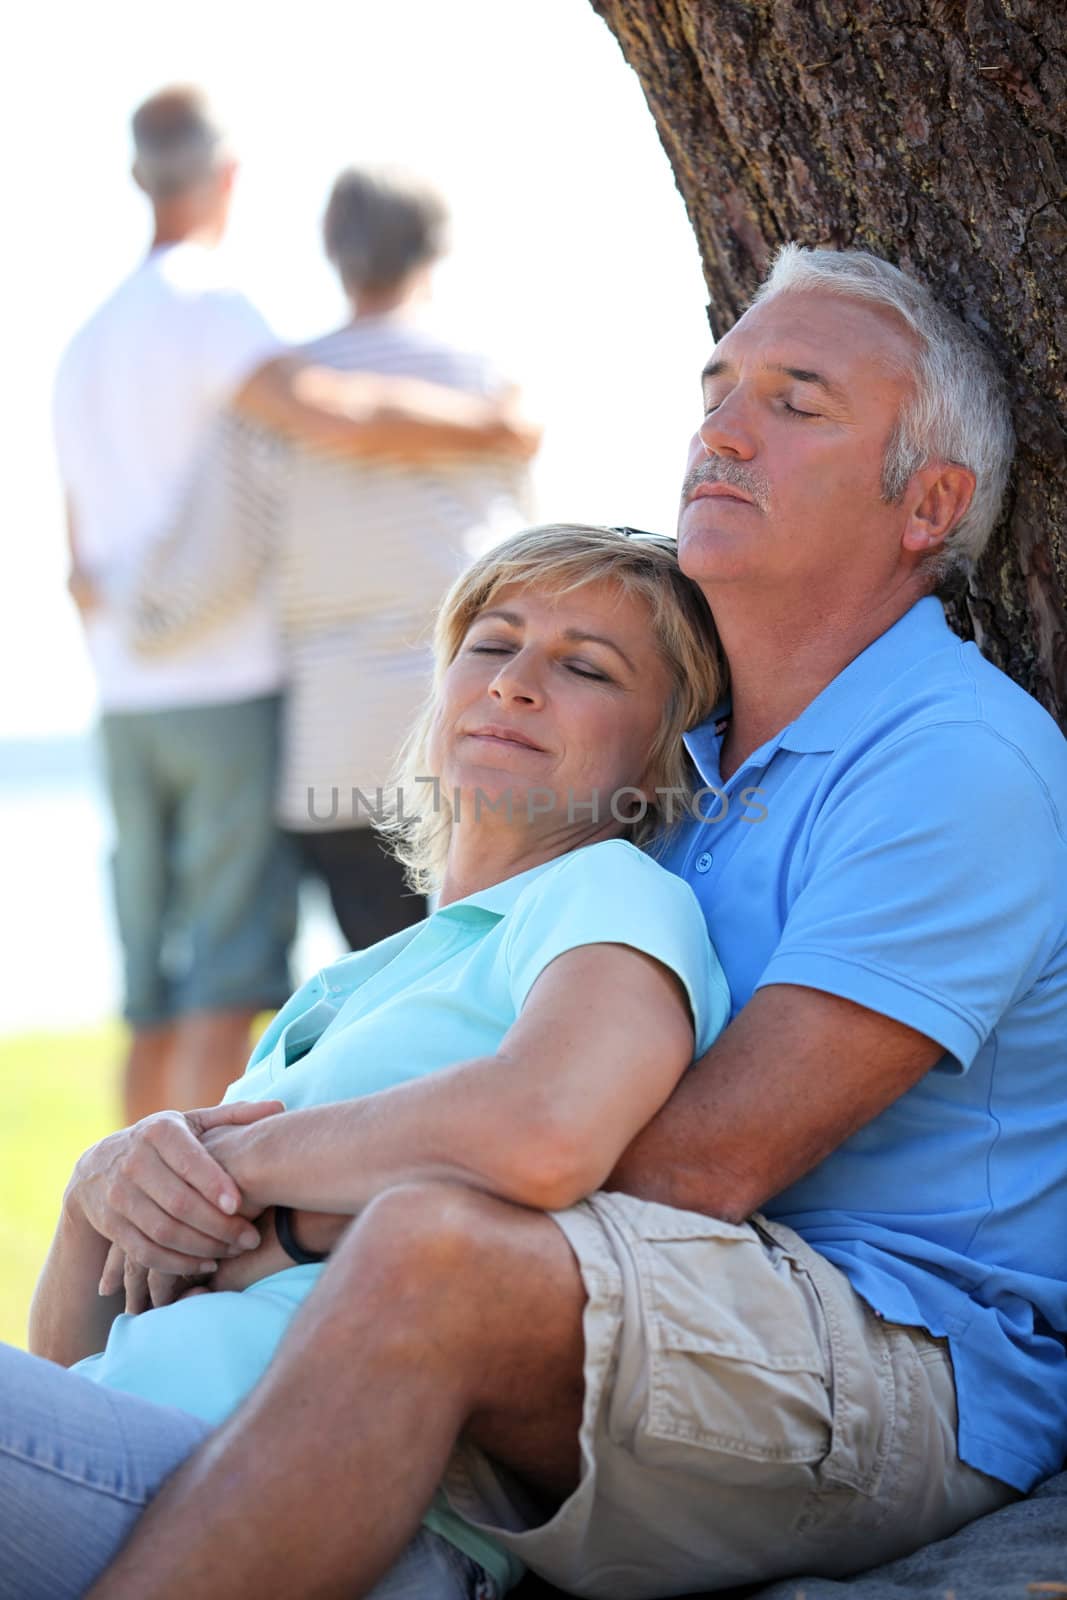 Mature couple dozing in the sunshine